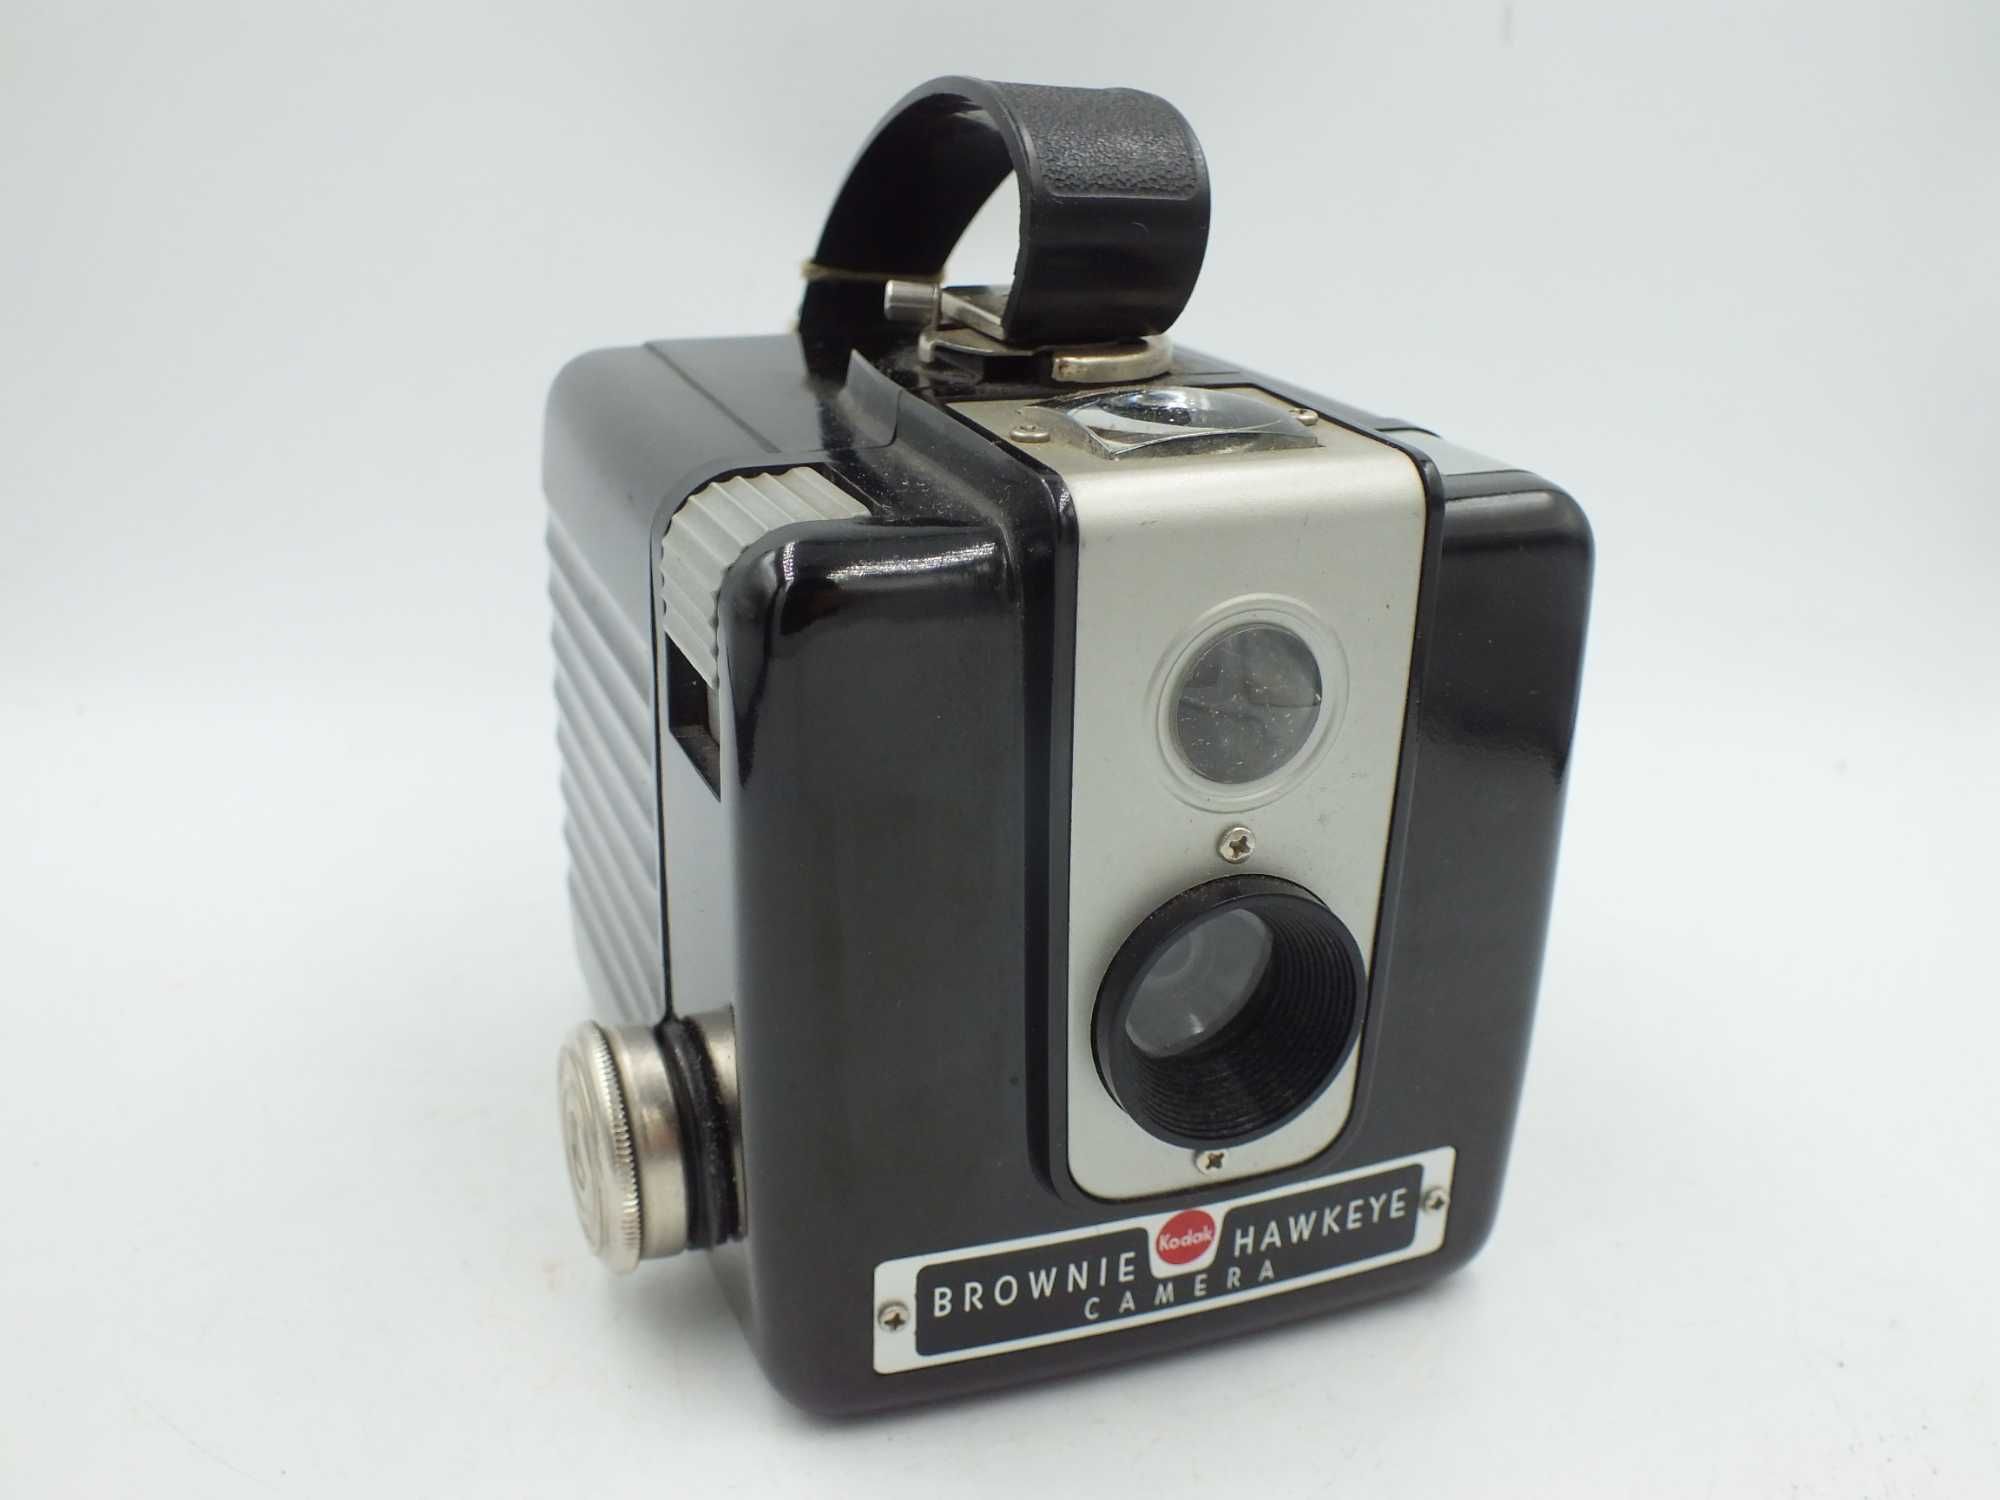 APARAT Vintage Kodak Brownie Hawkeye aparat bakelitowy B41/042316